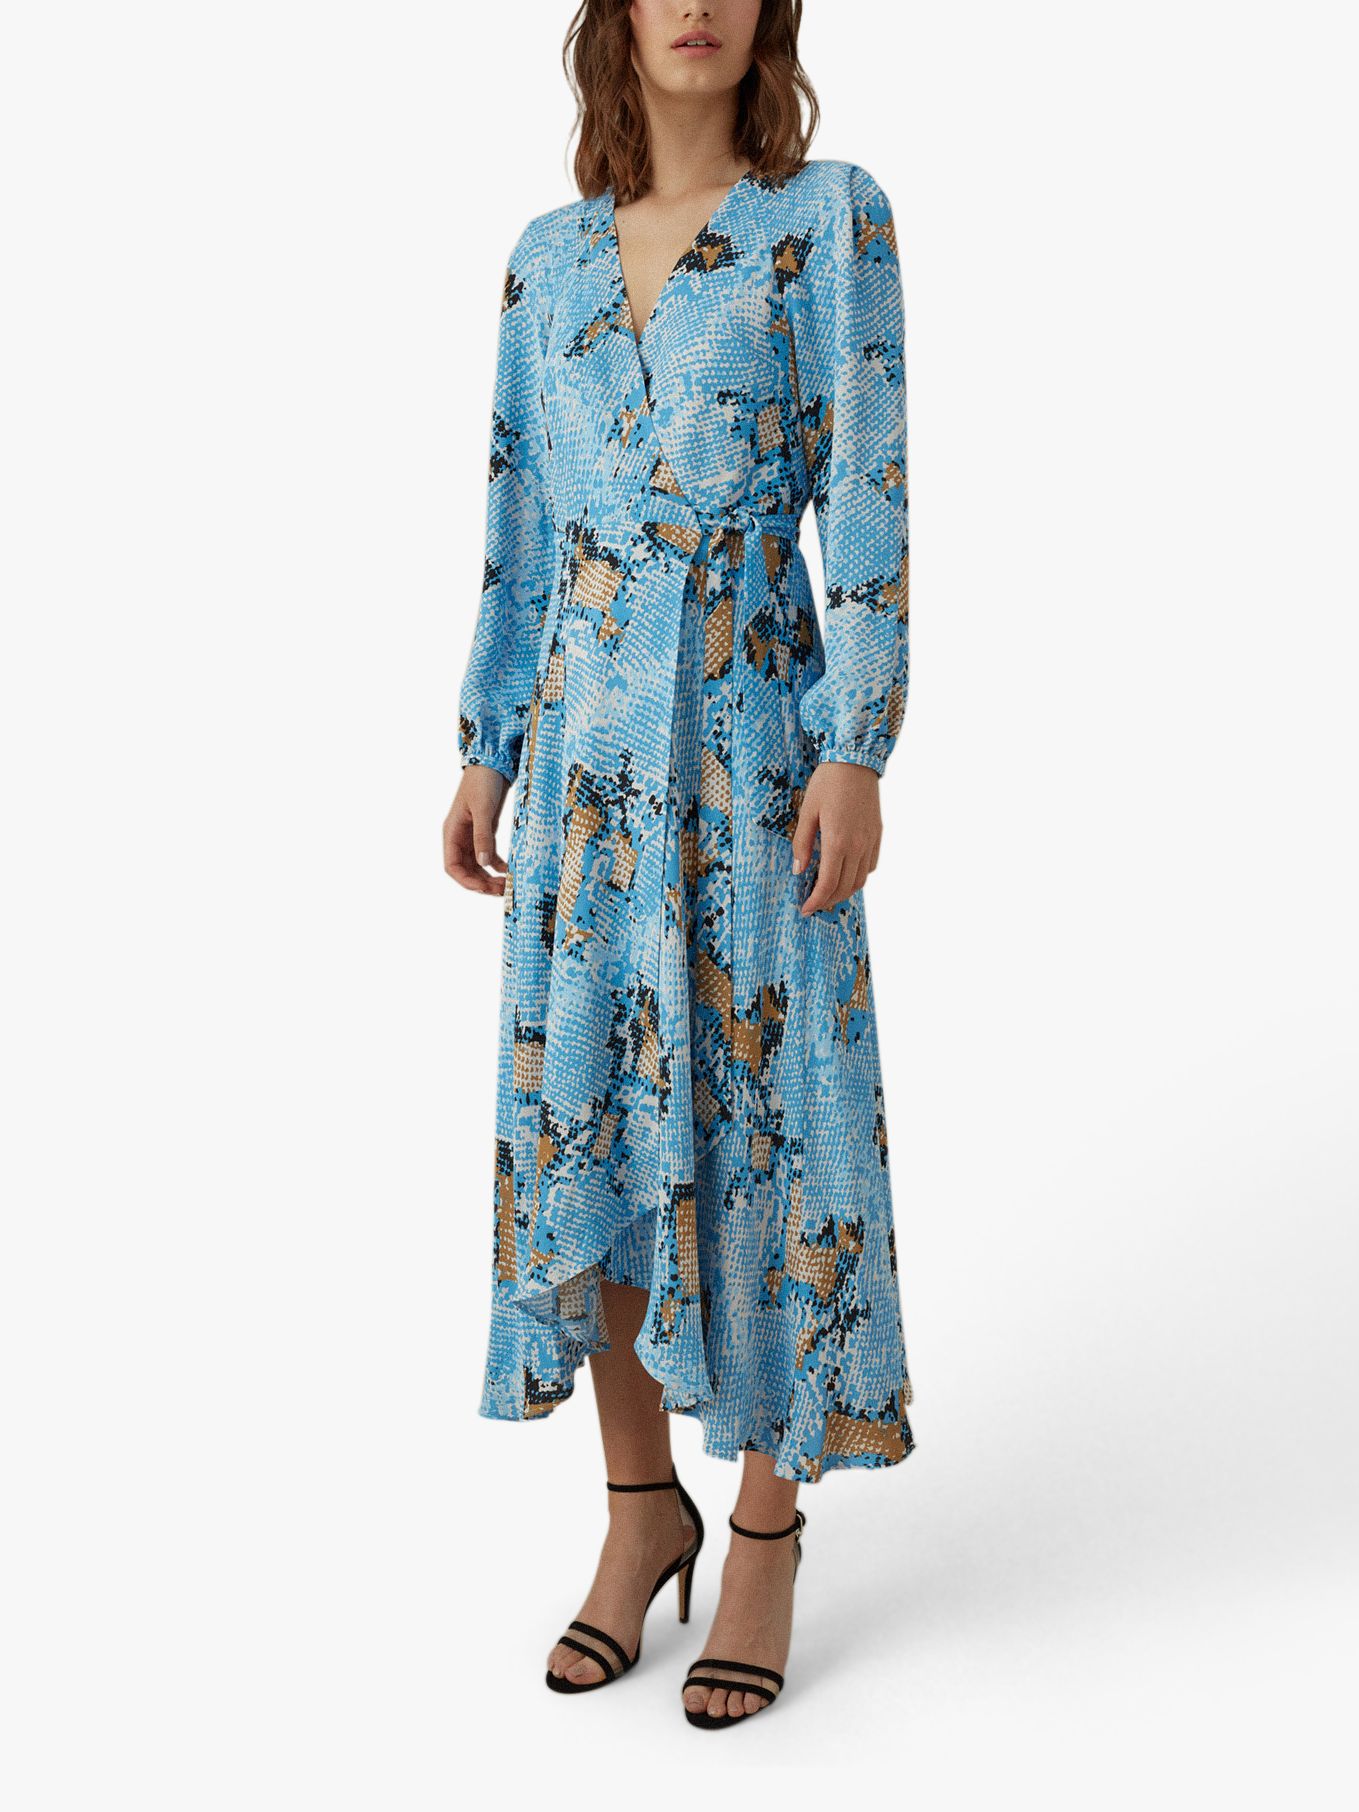 Karen Millen Snake Print Wrap Dress, Blue/Multi